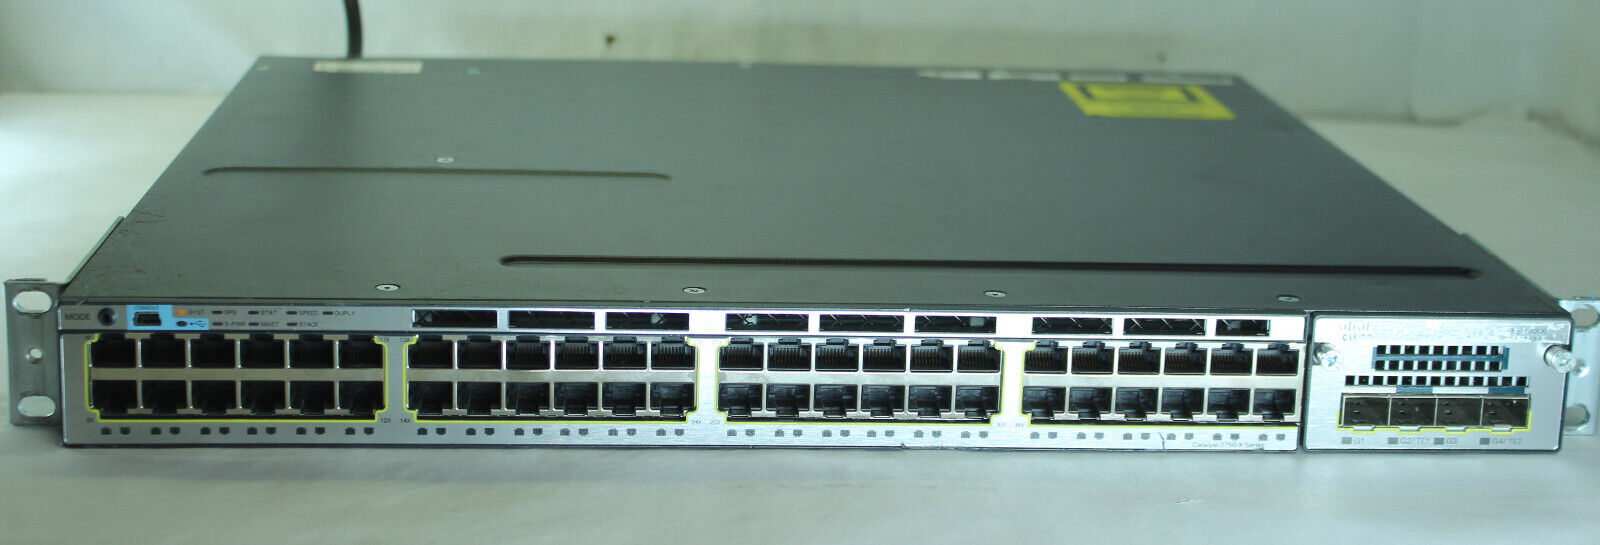 Cisco C3750X WS-C3750X-48T-S 48-Port Gigabit Network Switch with 4 SFP+ Module